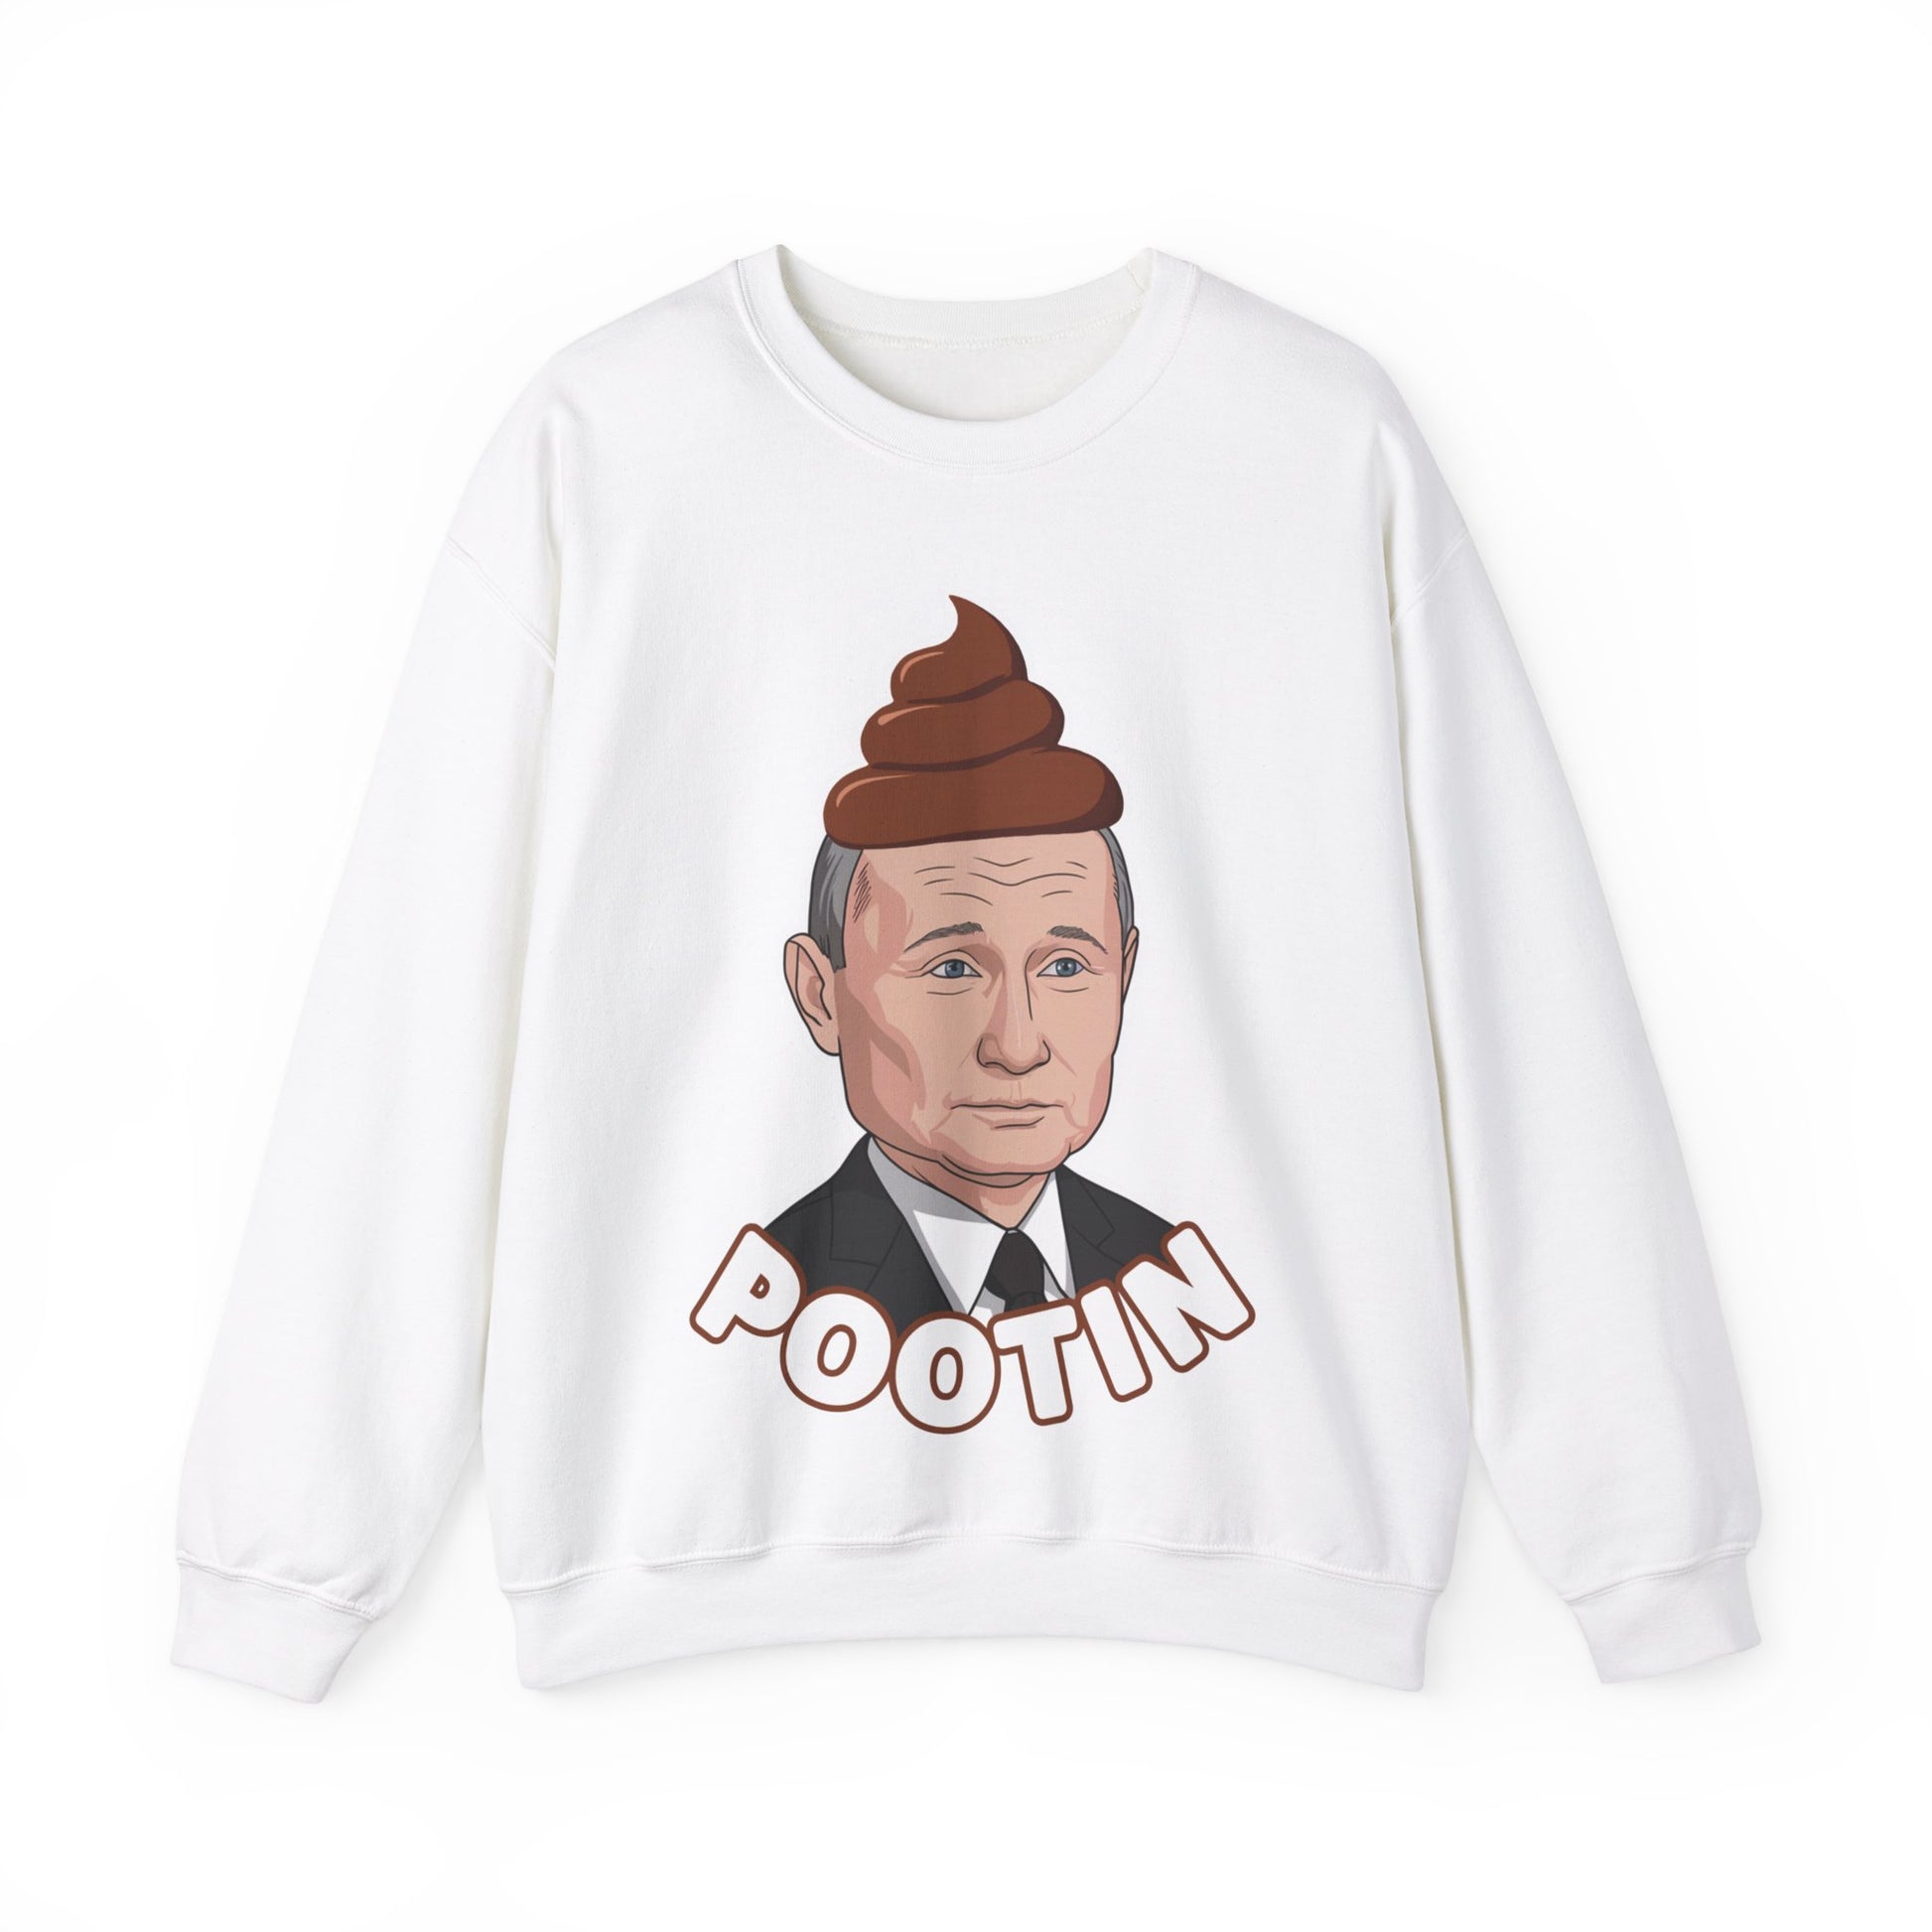 Pootin Funny Anti Vladimir Putin Unisex Heavy Blend Crewneck Sweatshirt Next Cult Brand